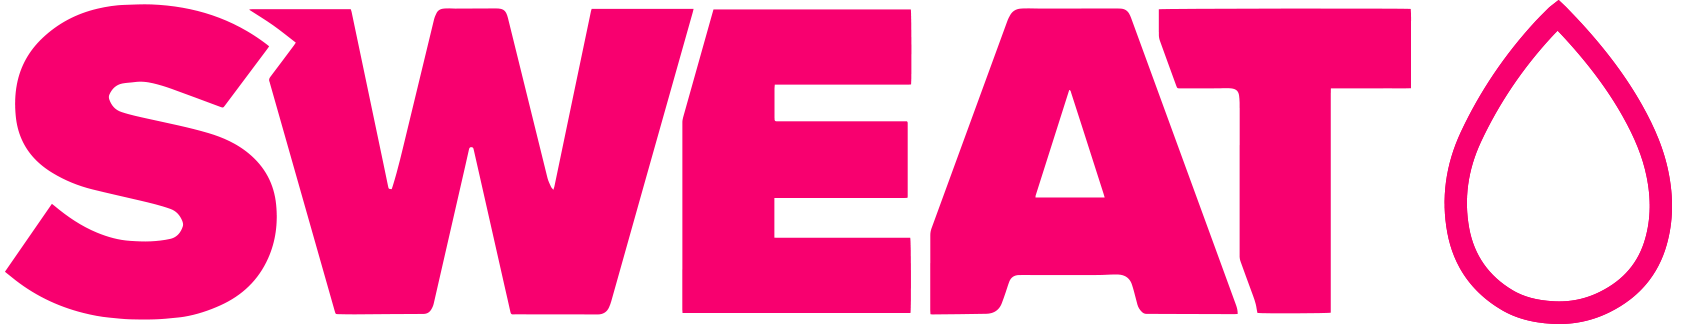 Sweat-logo-pink-drop-2019-1688x328